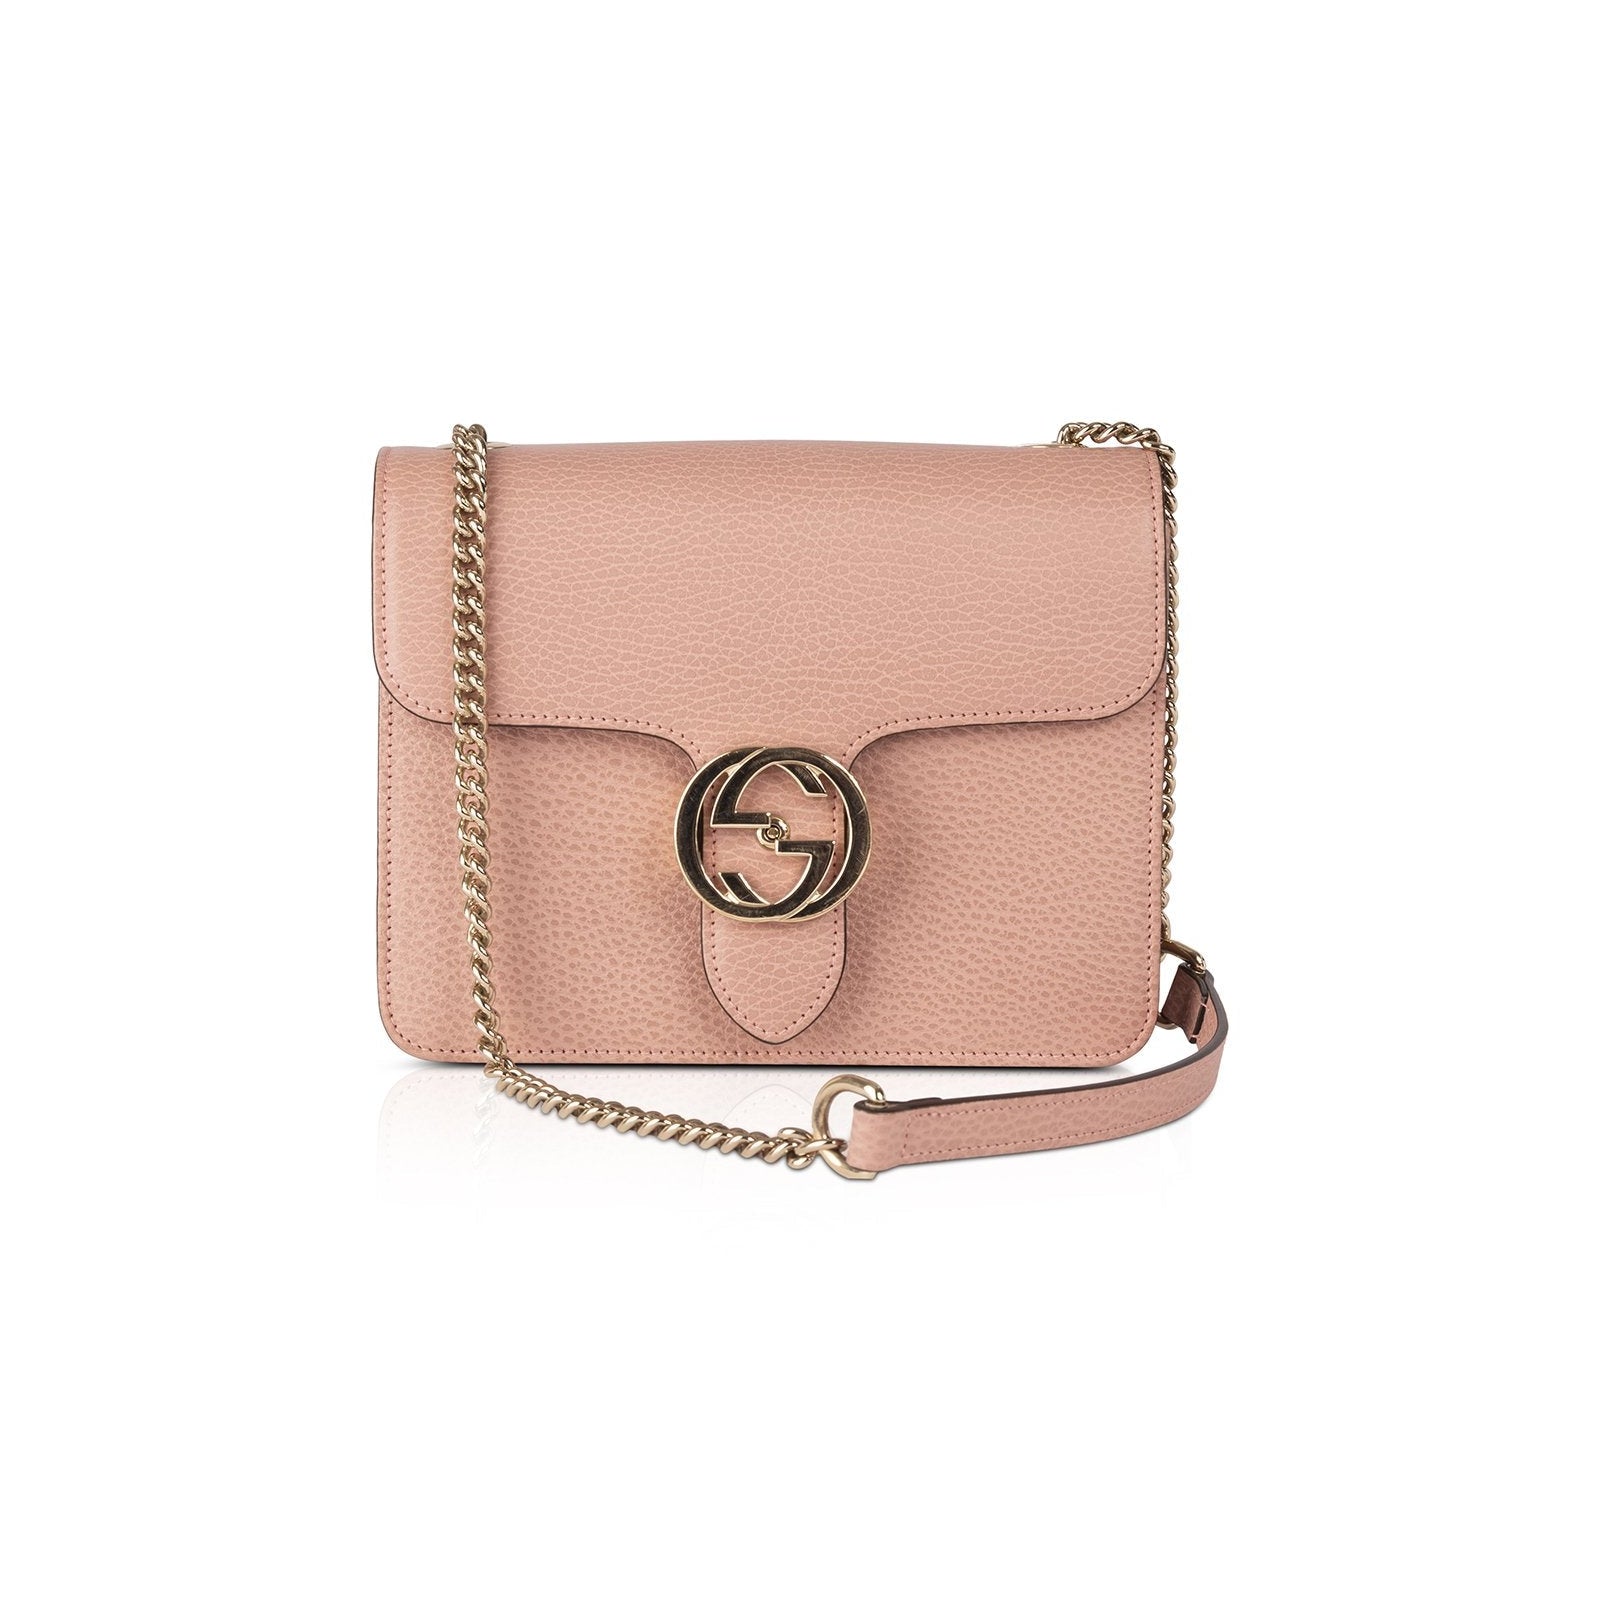 Gucci Interlocking G Shoulder Bag Small Pink in Pebbled Calfskin